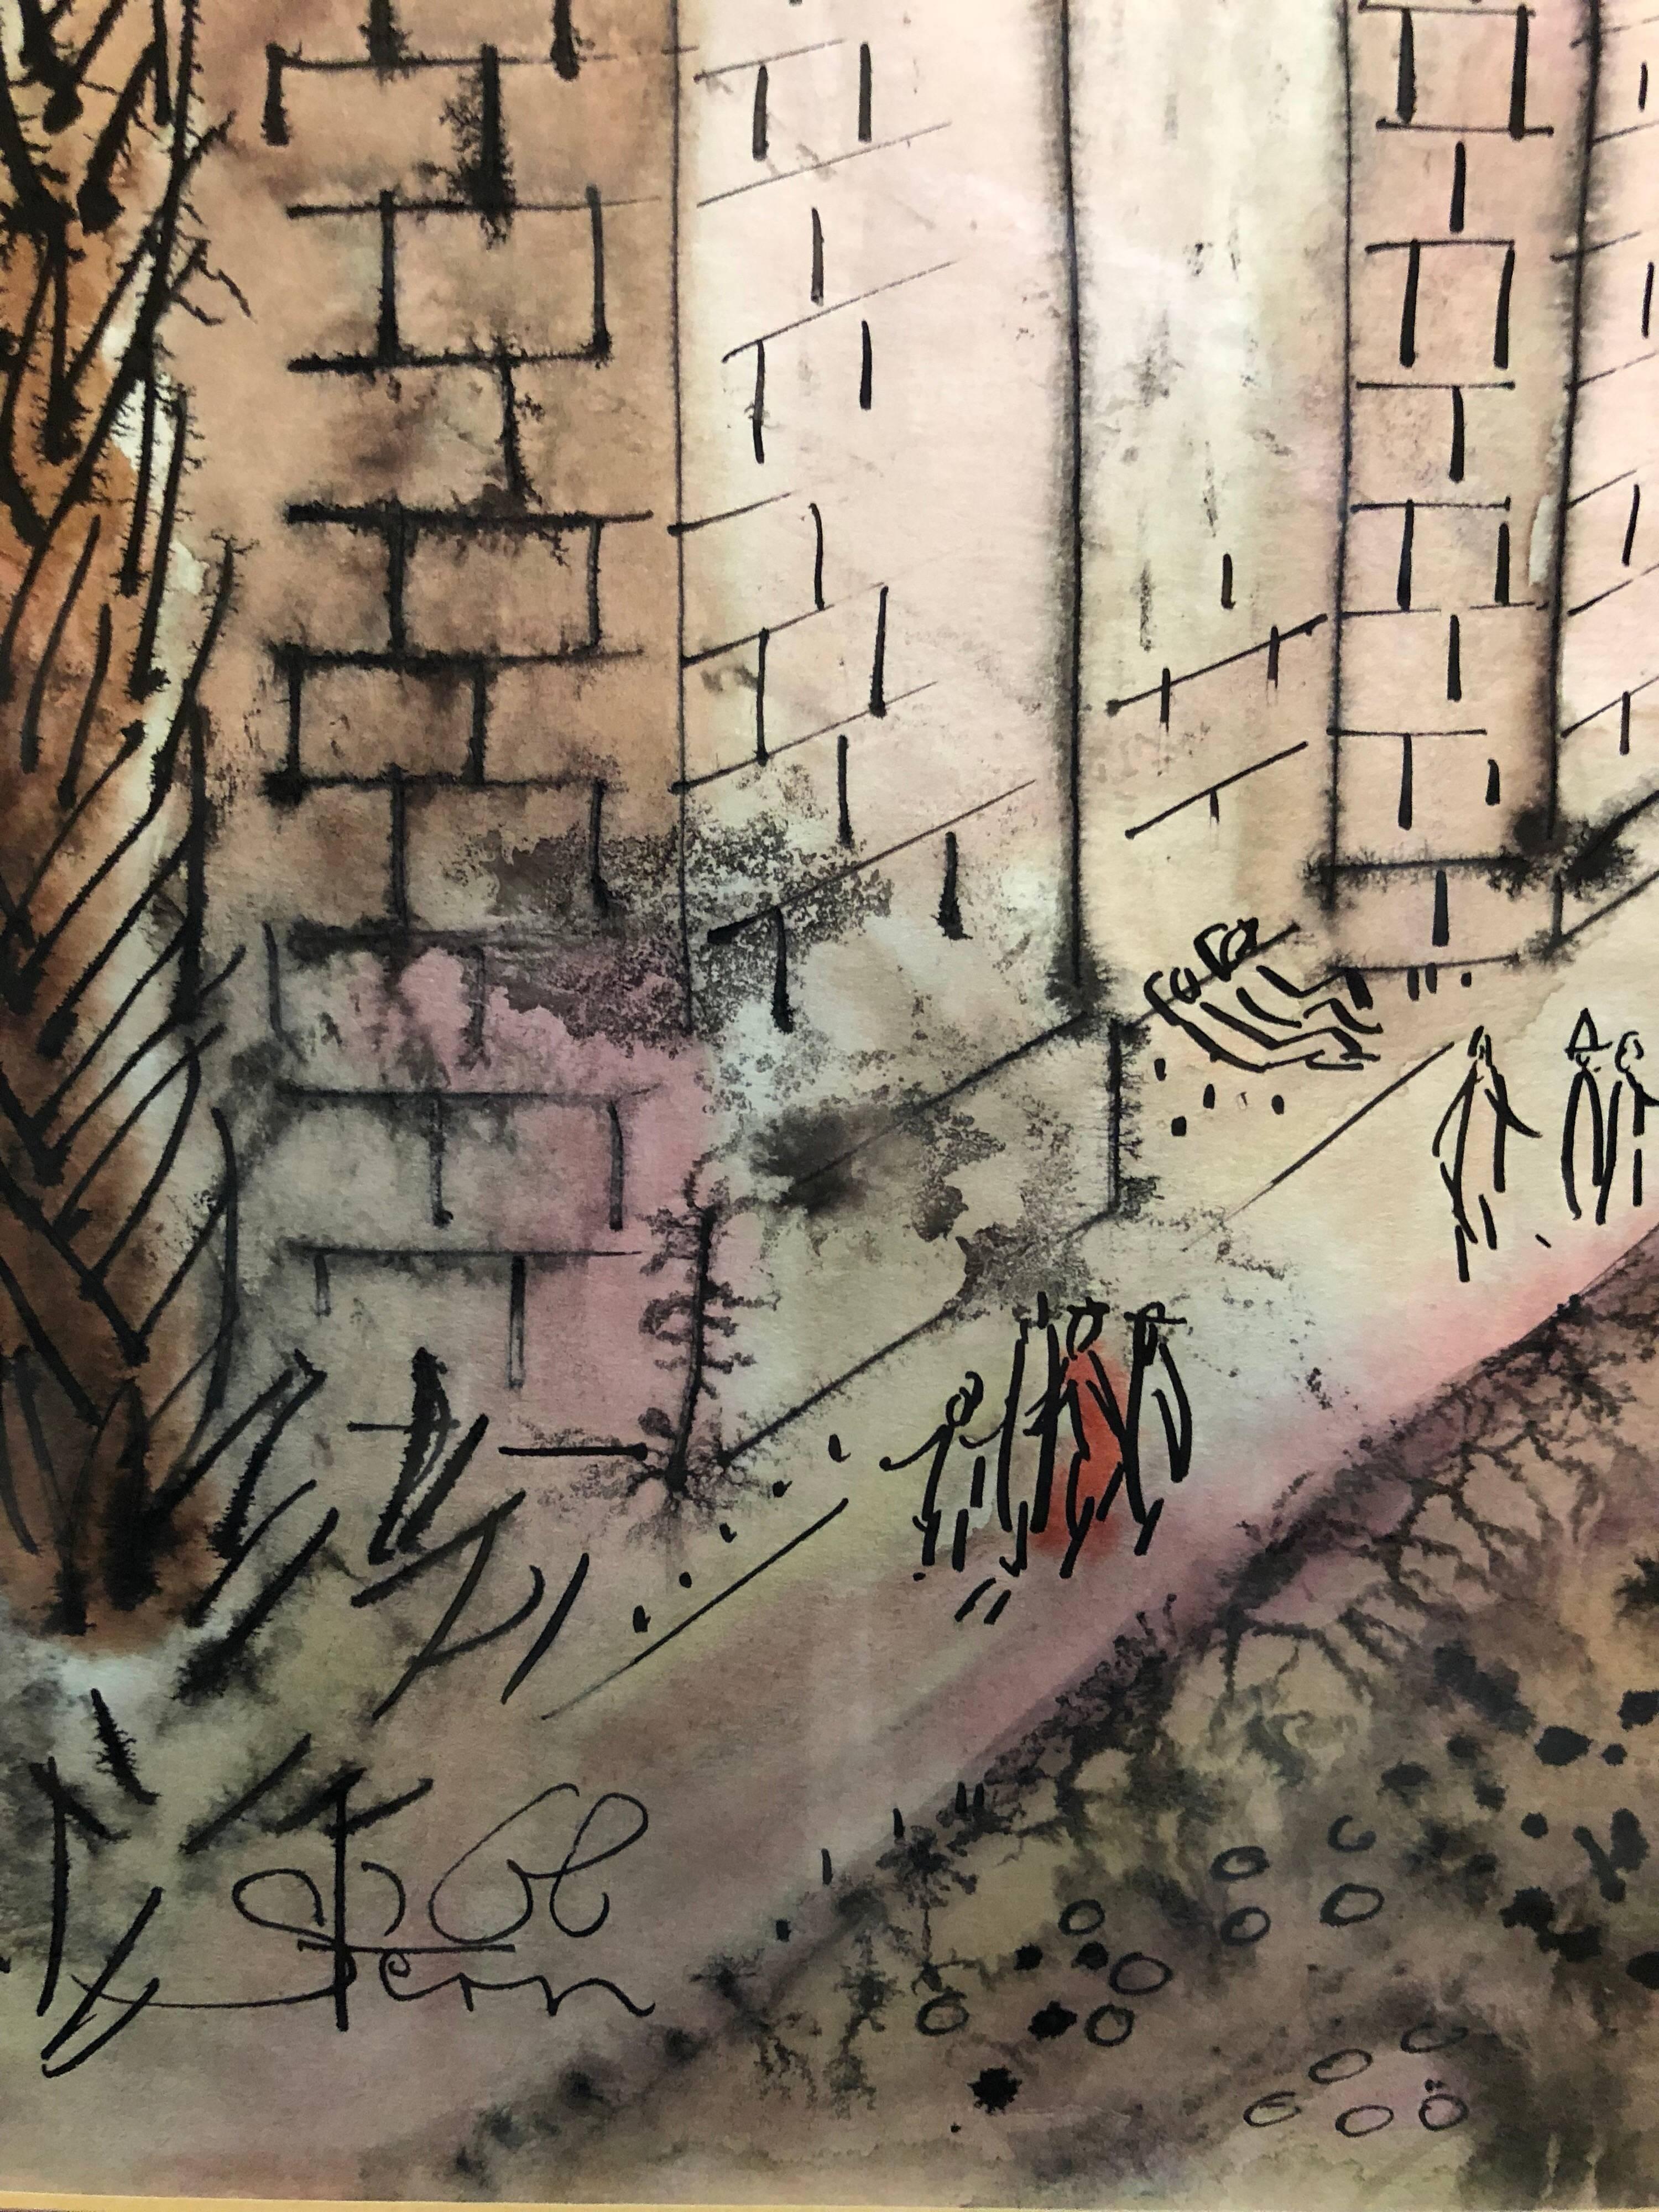 Old City Jerusalem City Walls landscape Scene Painting, Judaica For Sale 1